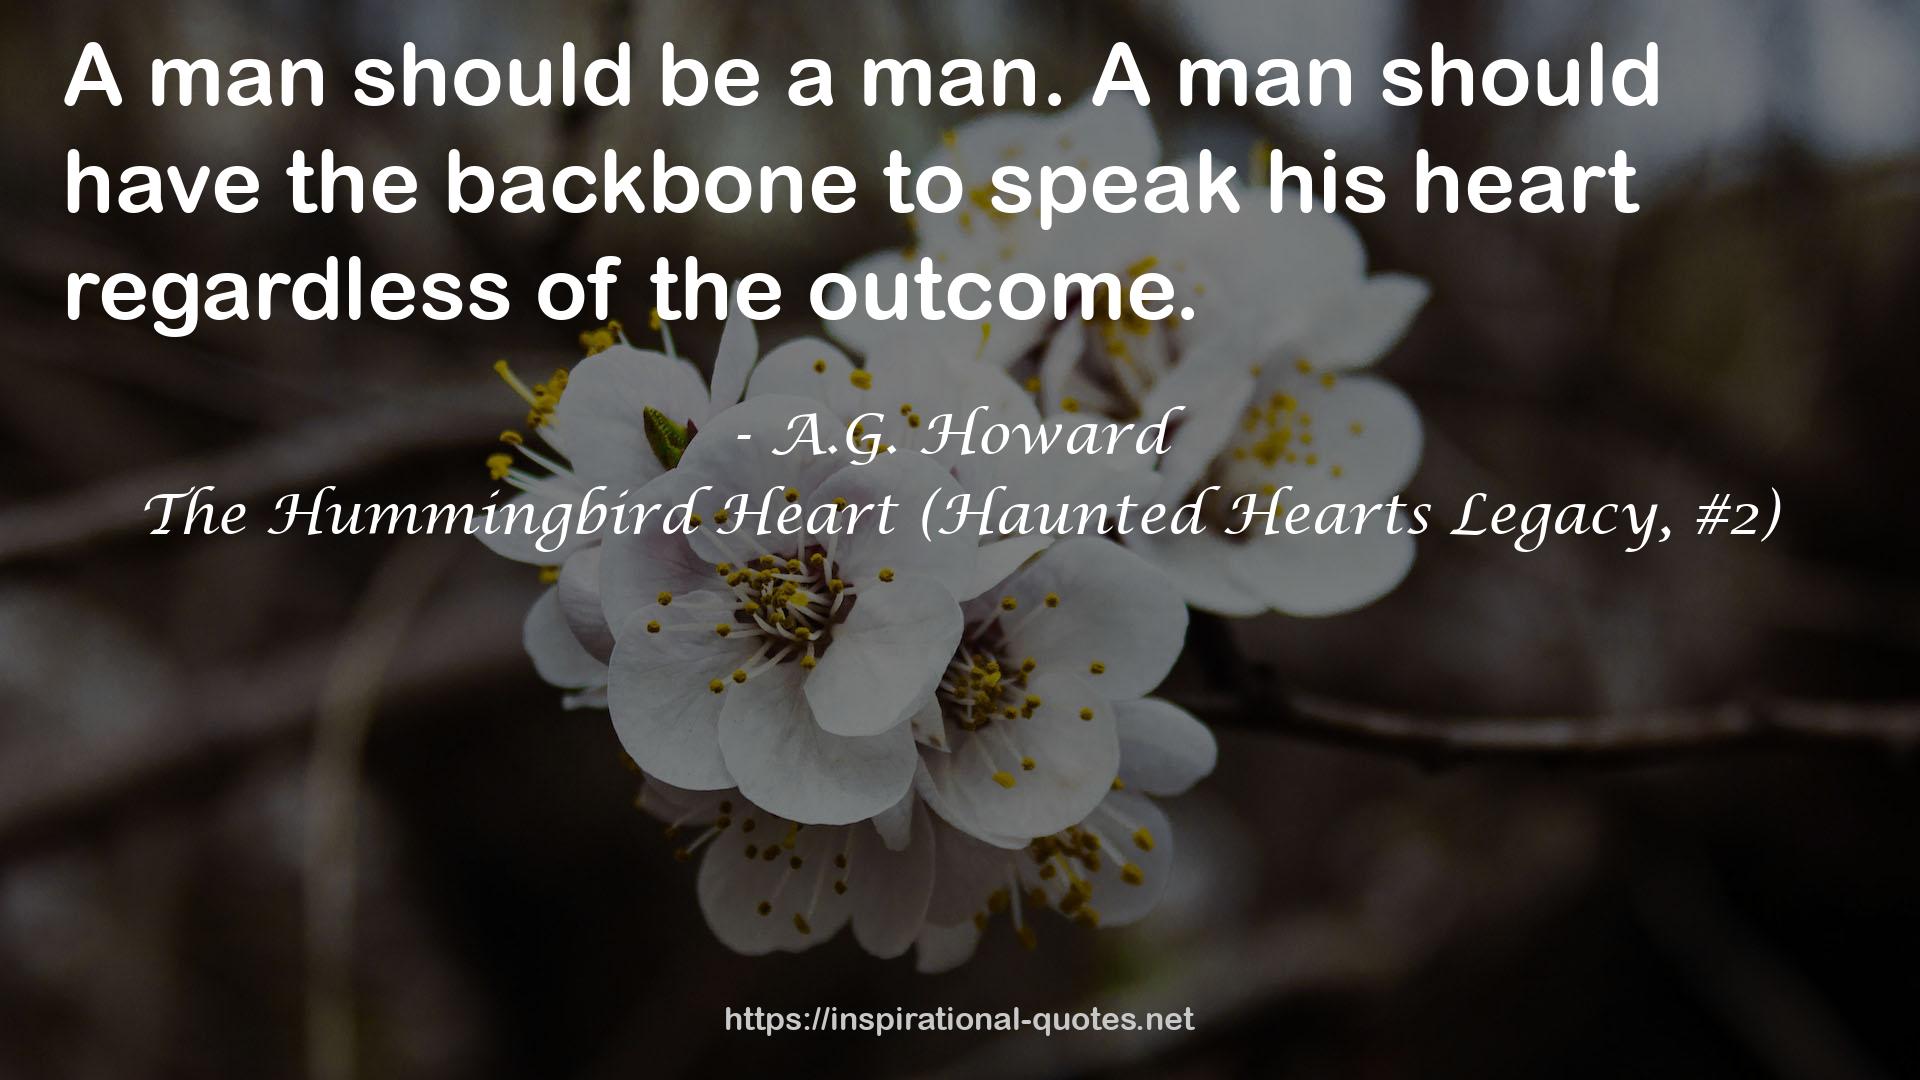 The Hummingbird Heart (Haunted Hearts Legacy, #2) QUOTES